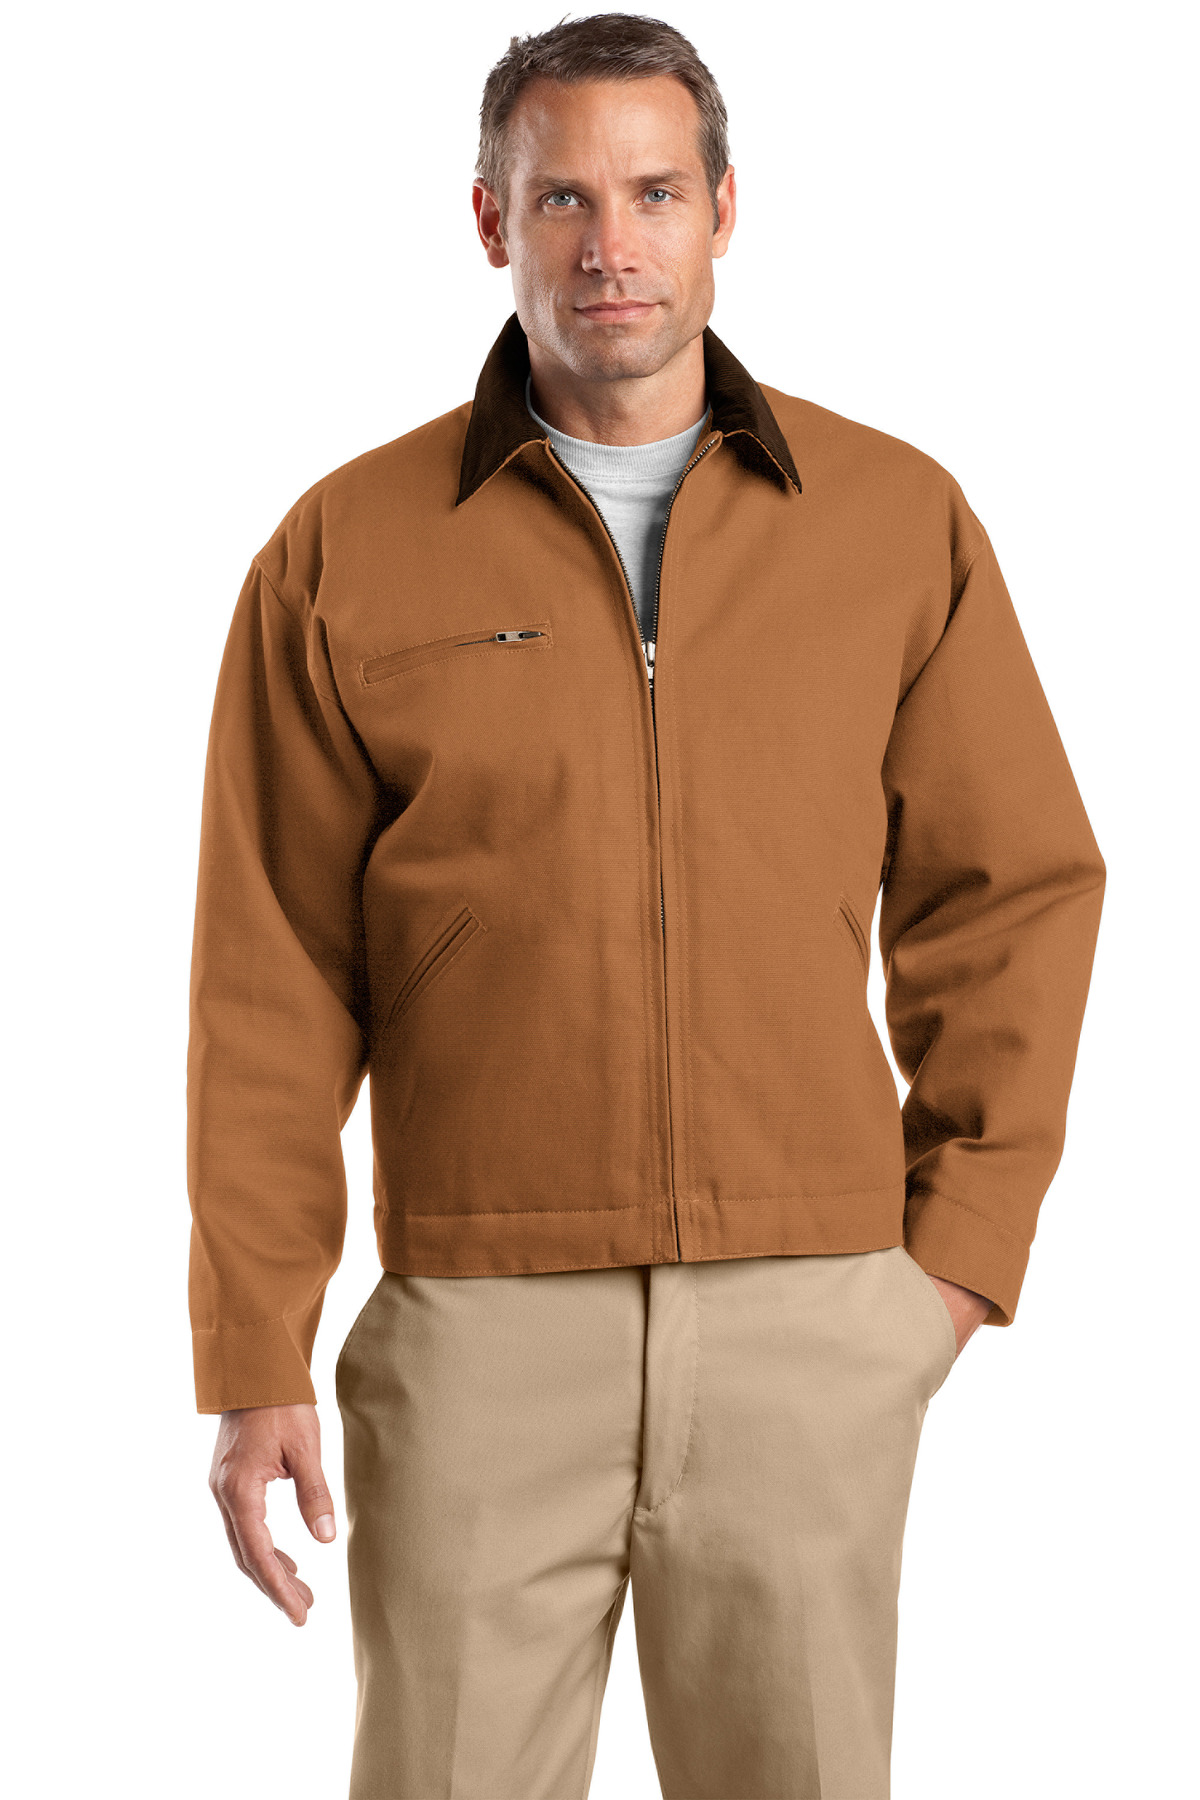 CornerStone - Duck Cloth Work Jacket. J763